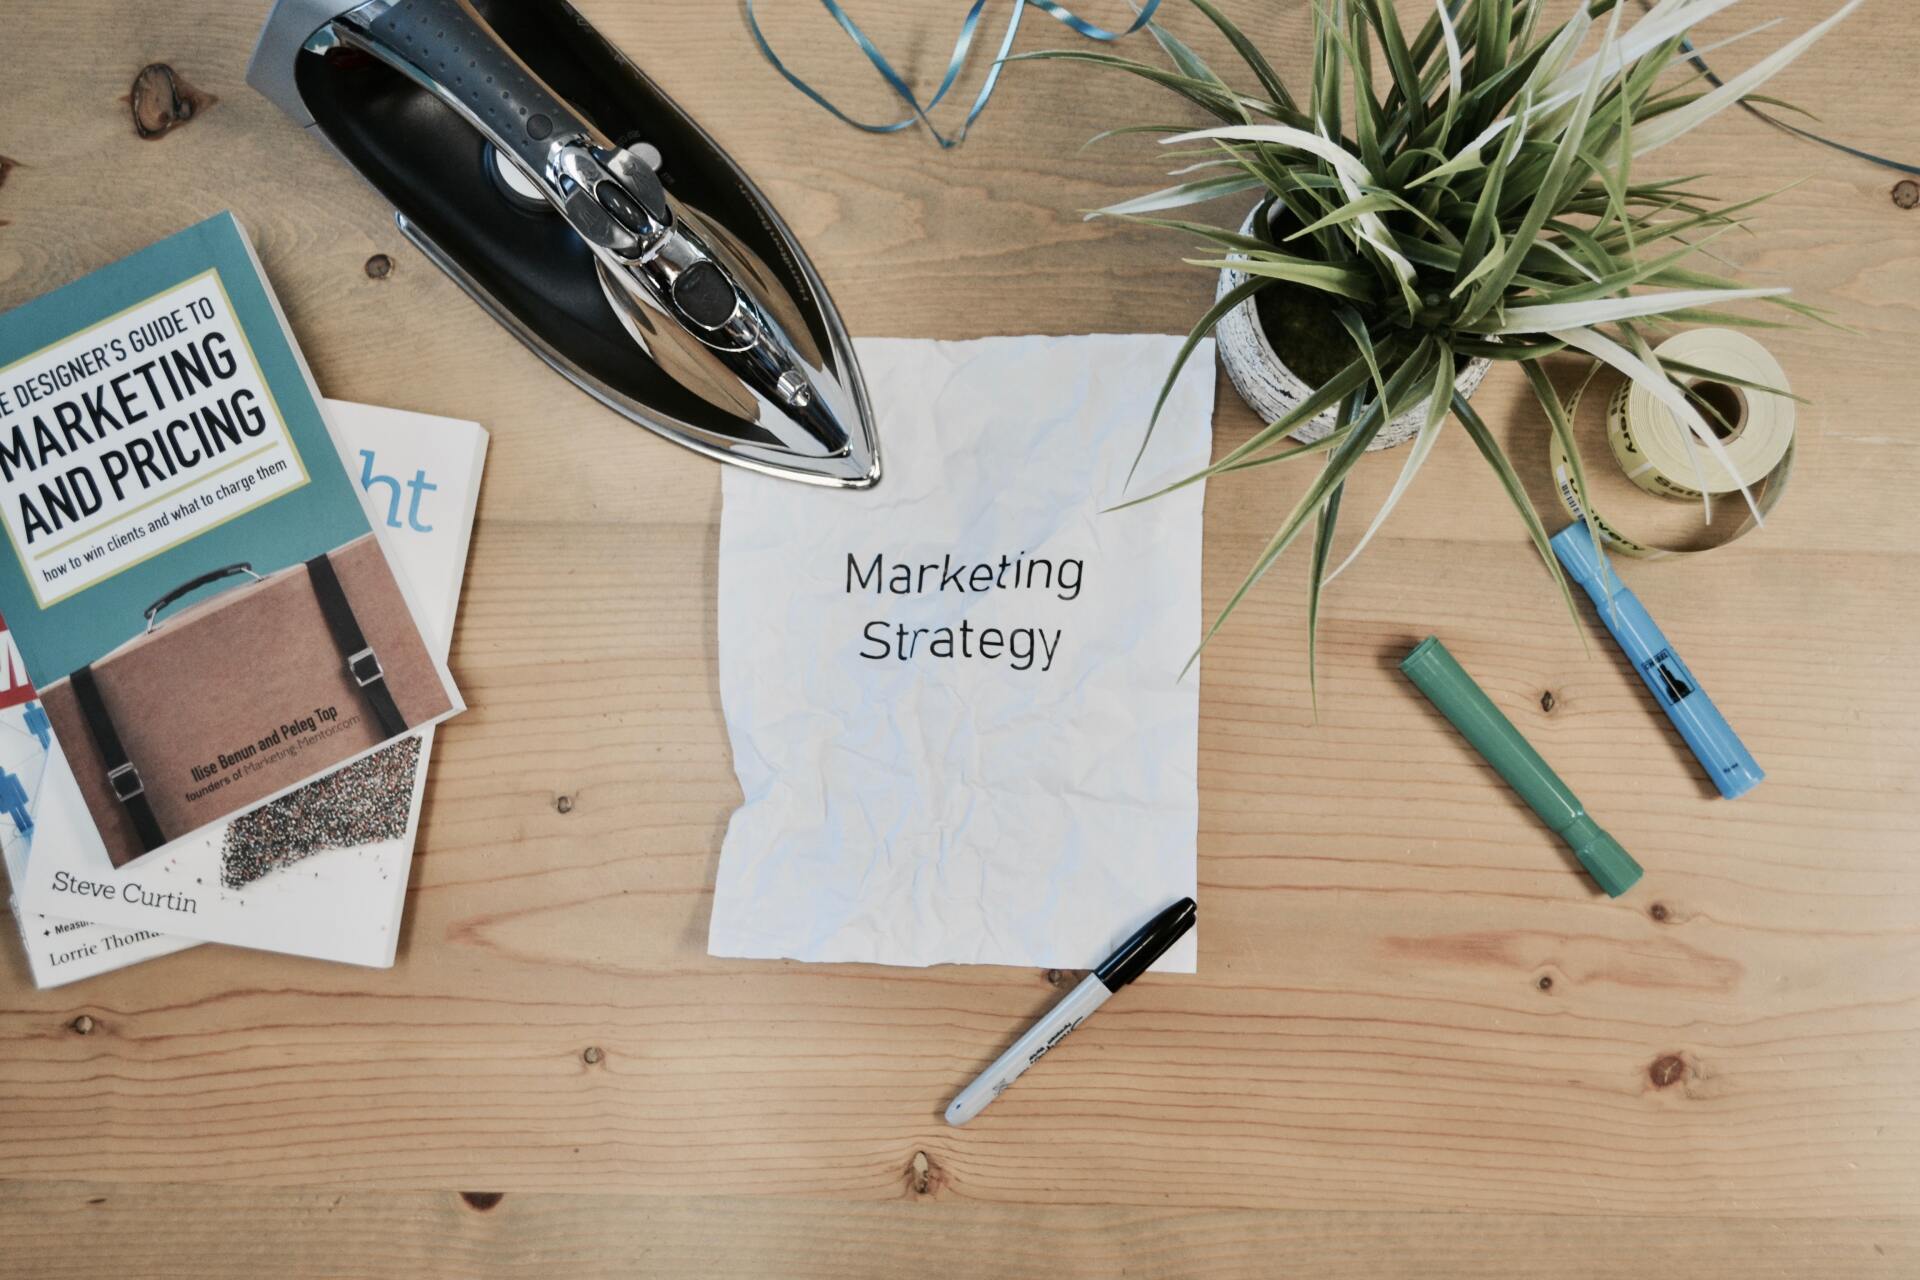 Marketing Strategy by Label Marketing